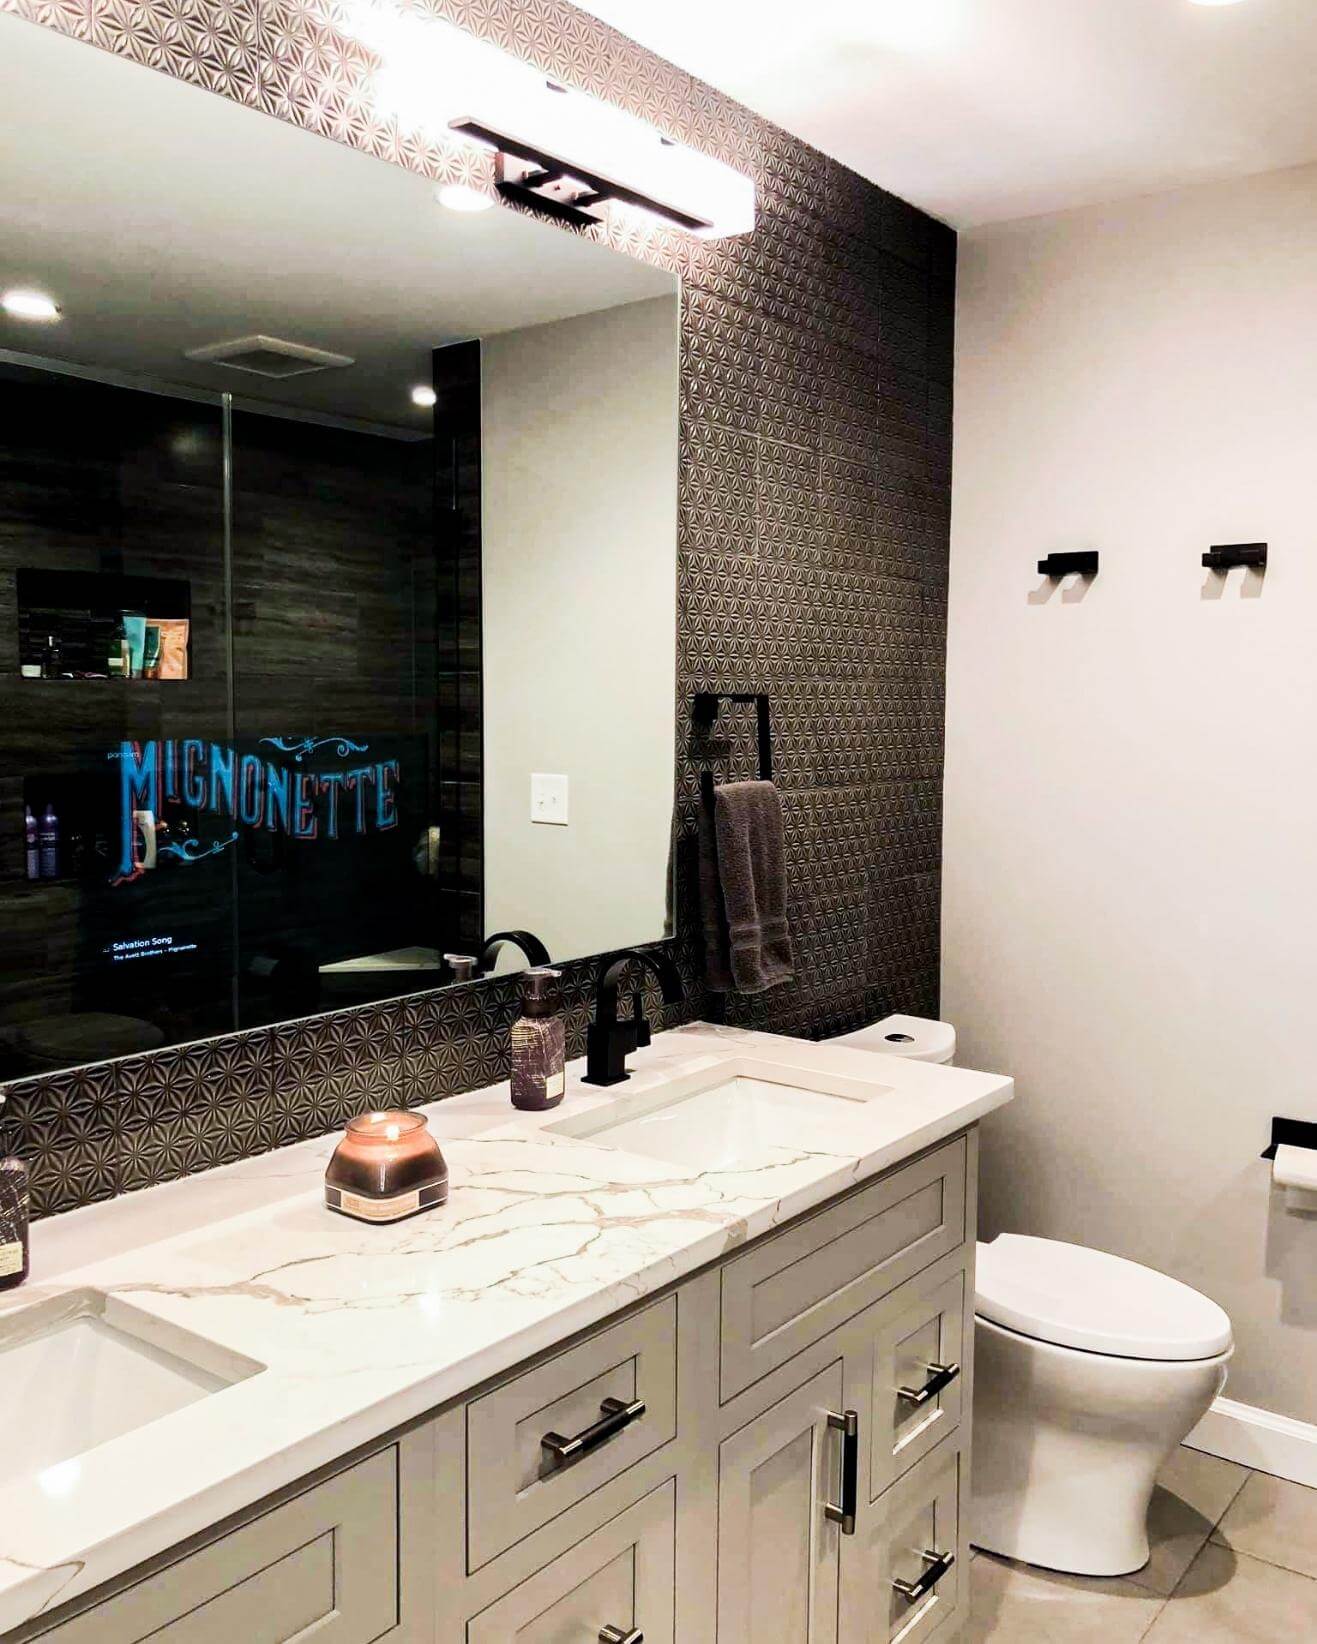 Geist residence remodel master bathroom